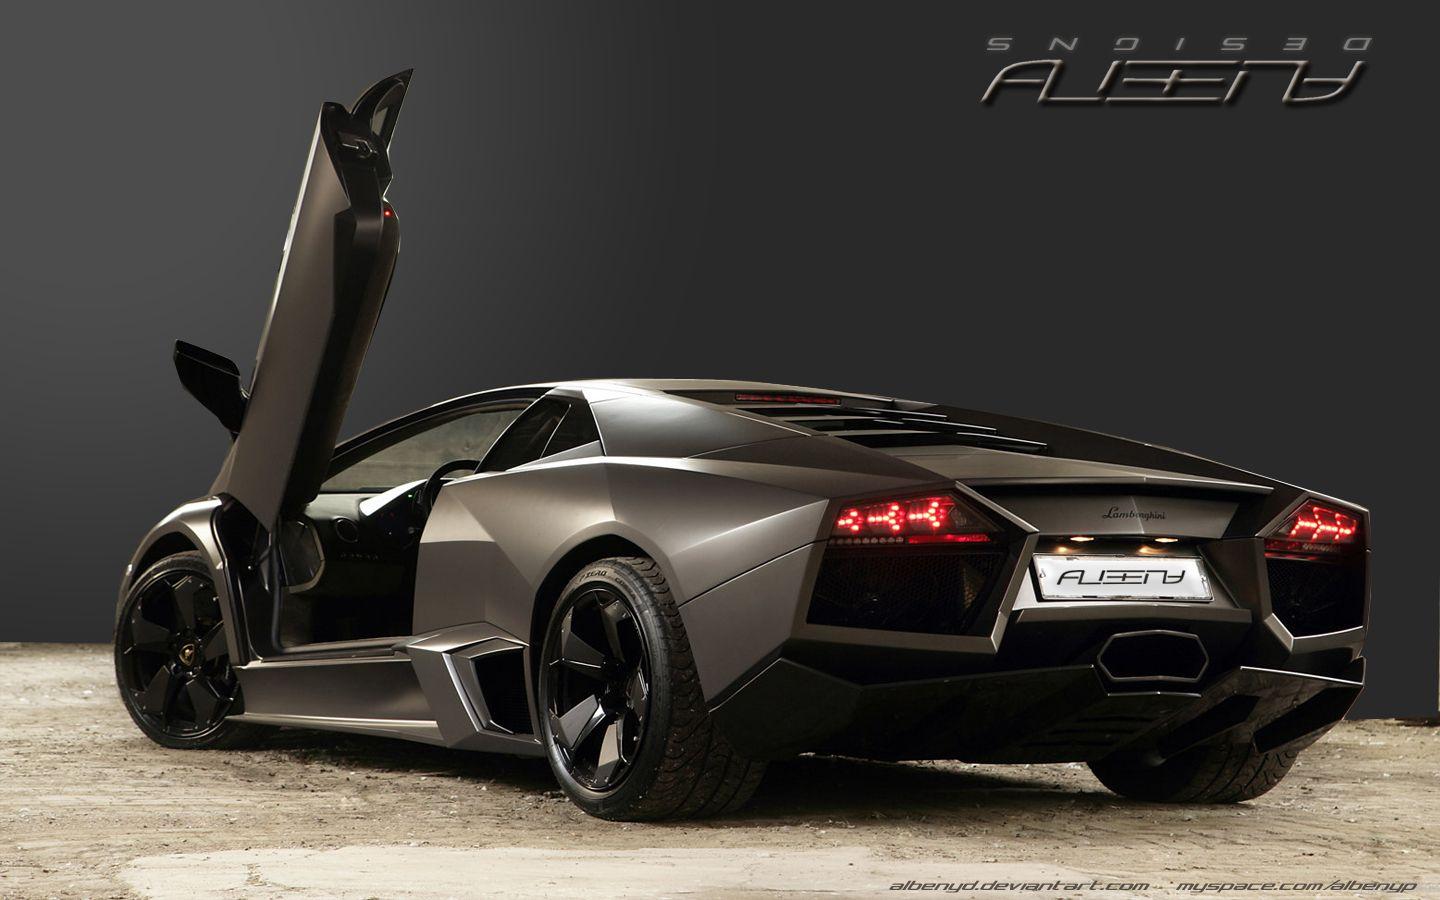 Perfect HD Car Wallpaper Of Lamborghini At Image Q2lf With HD